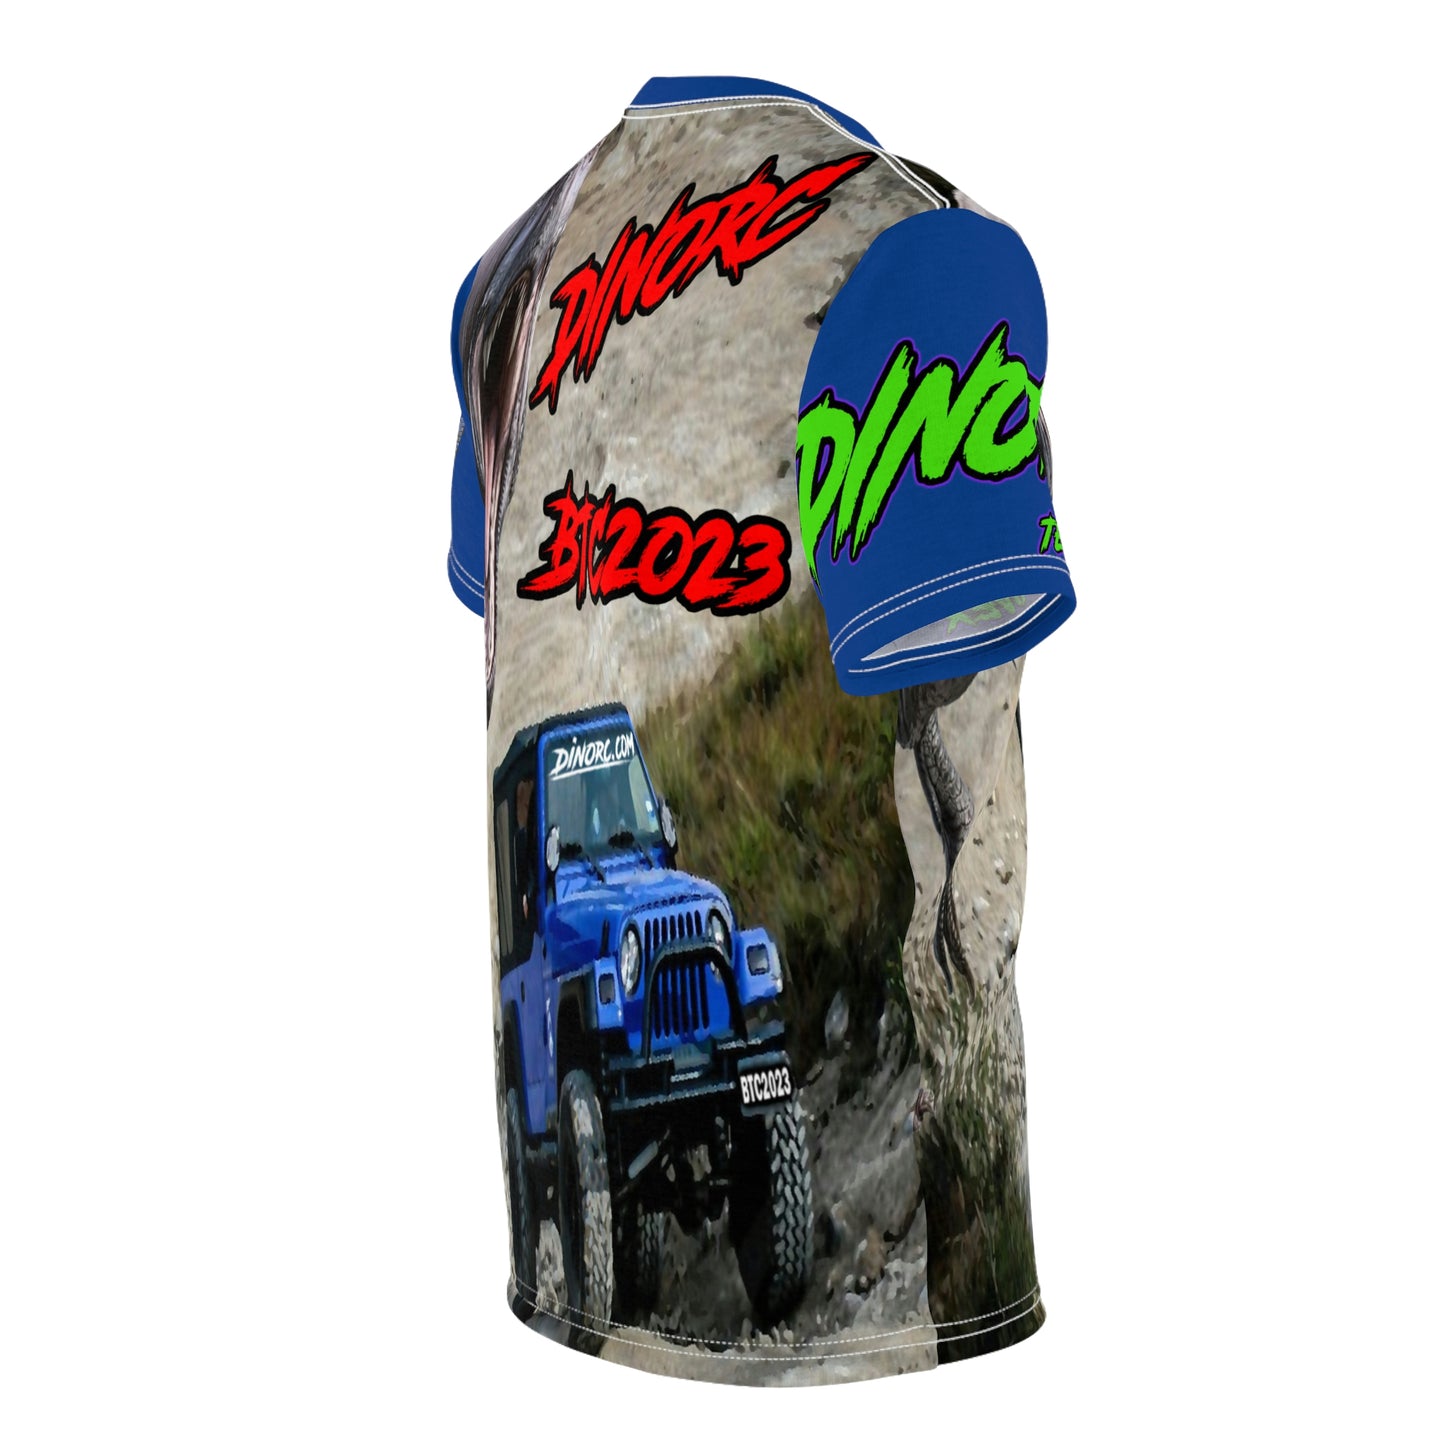 DinoRC BTC2023 Team Driver T Shirt Blue Sleeves